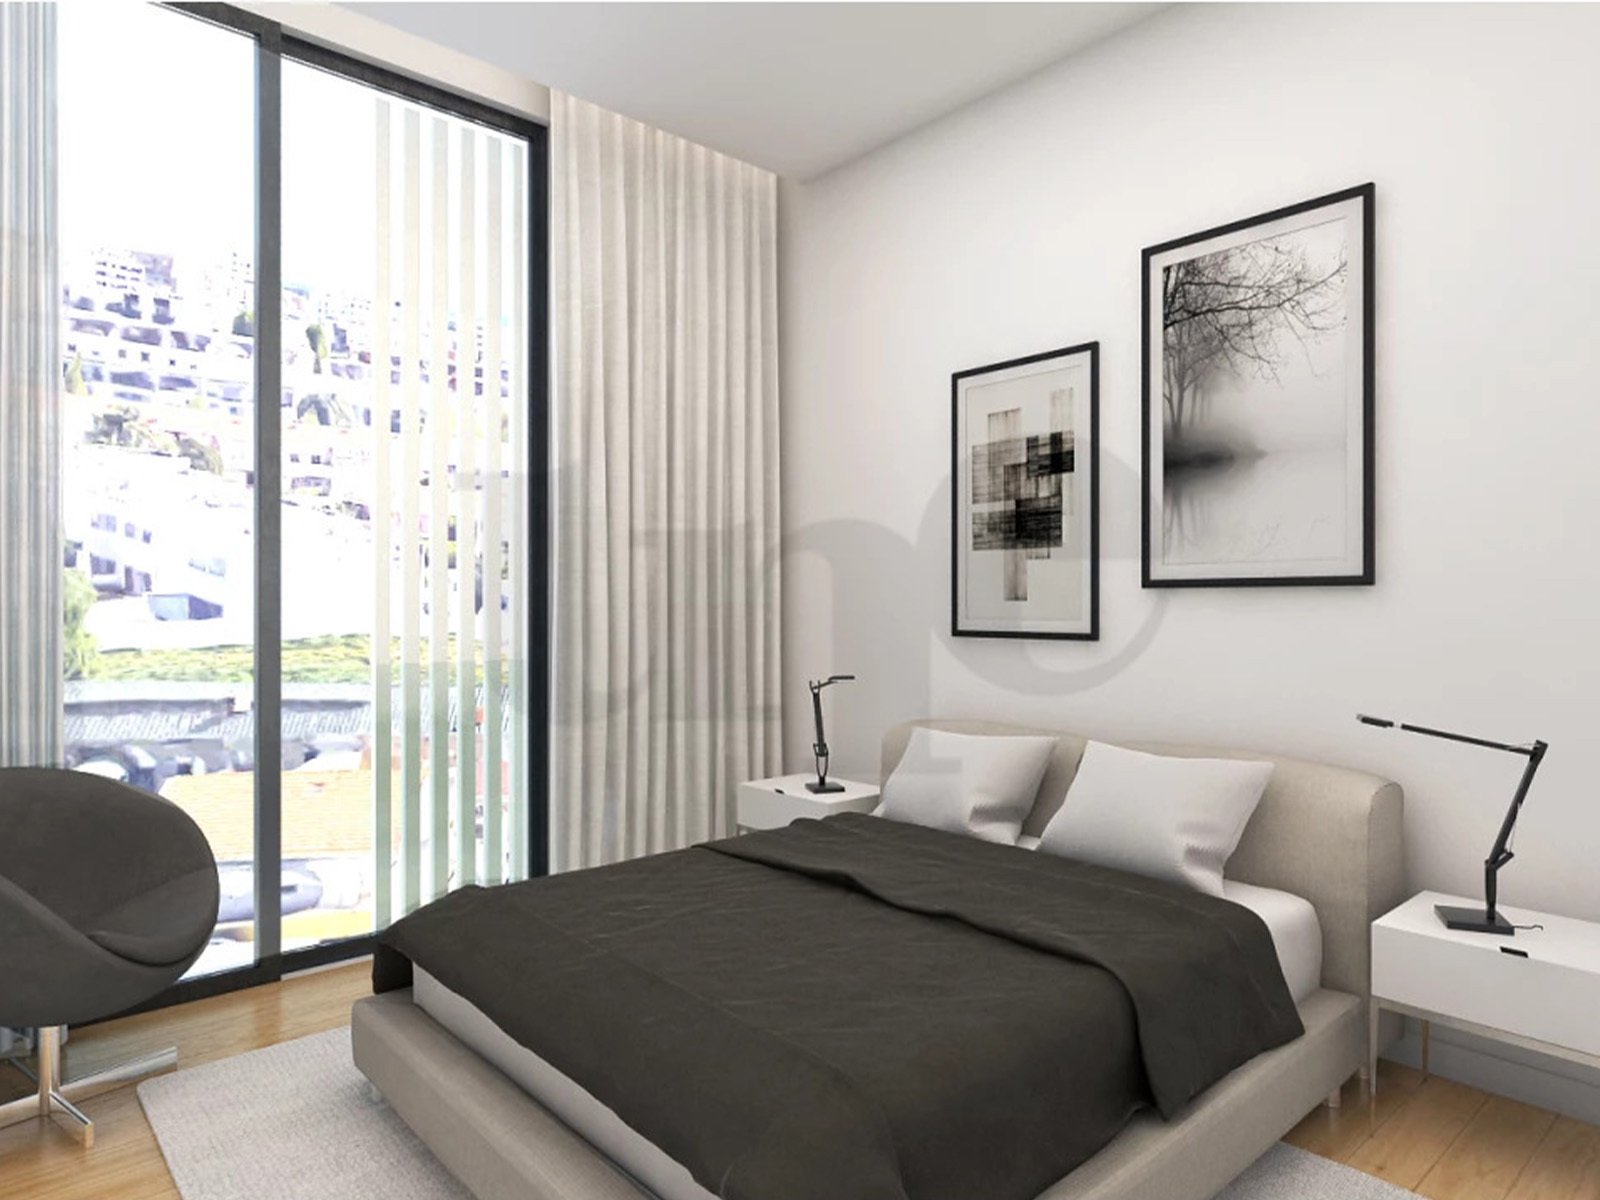 3 bedroom apartment with 152 sq m in Leça da Palmeira 1149986487